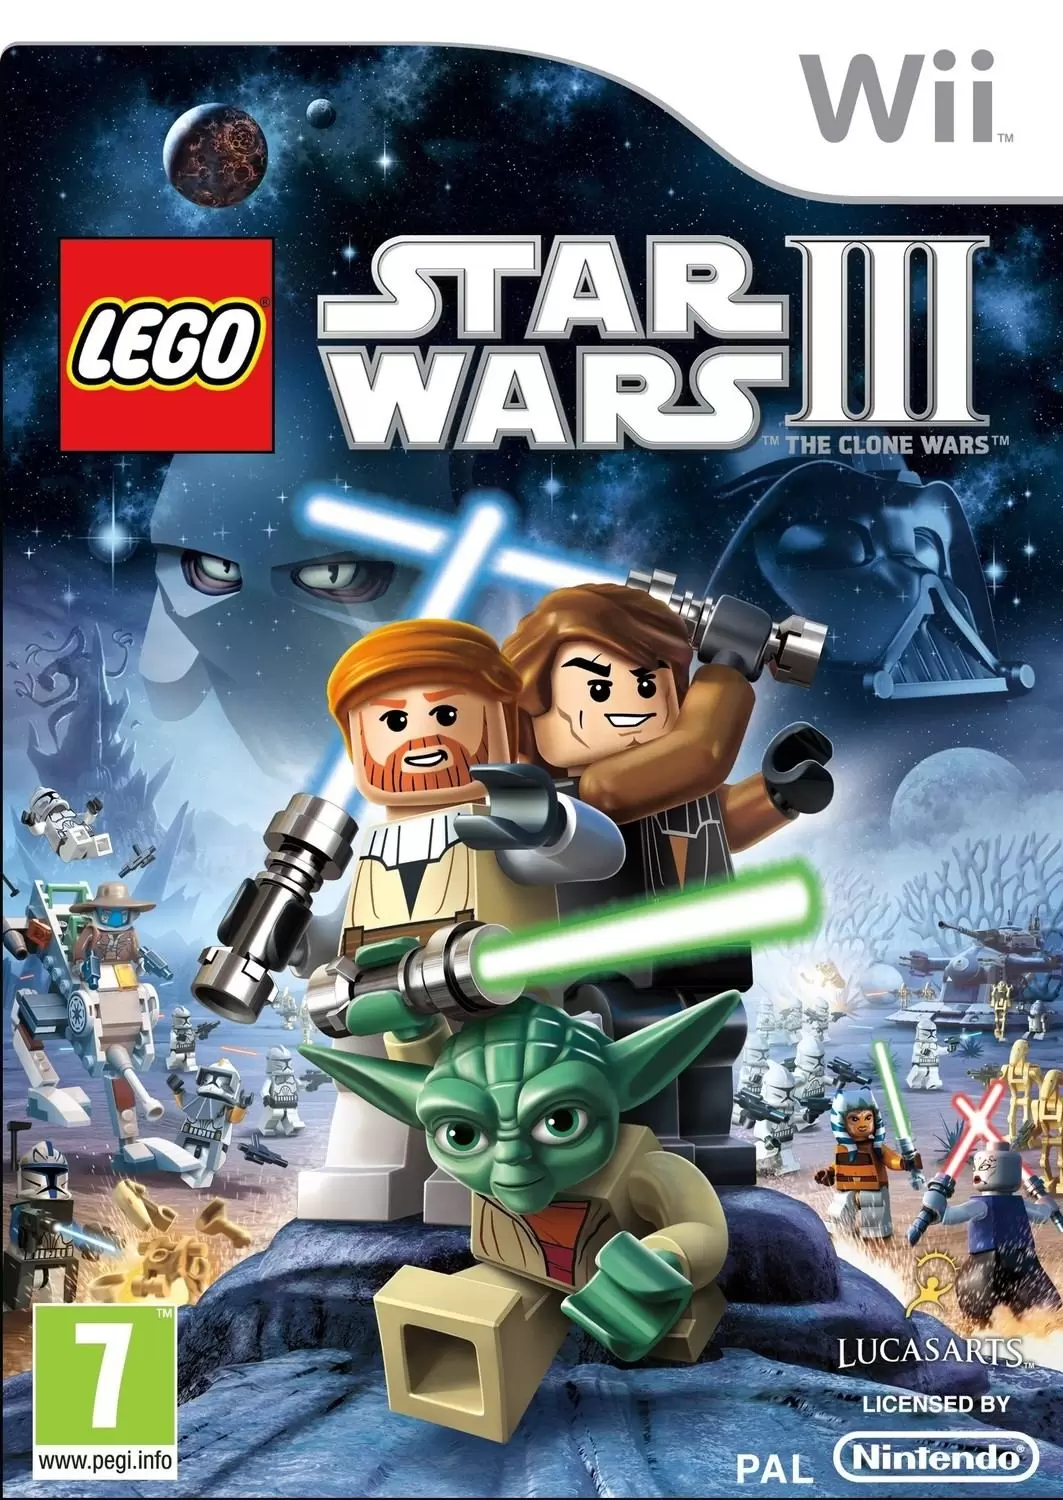 Nintendo Wii Games - LEGO Star Wars III: The Clone Wars